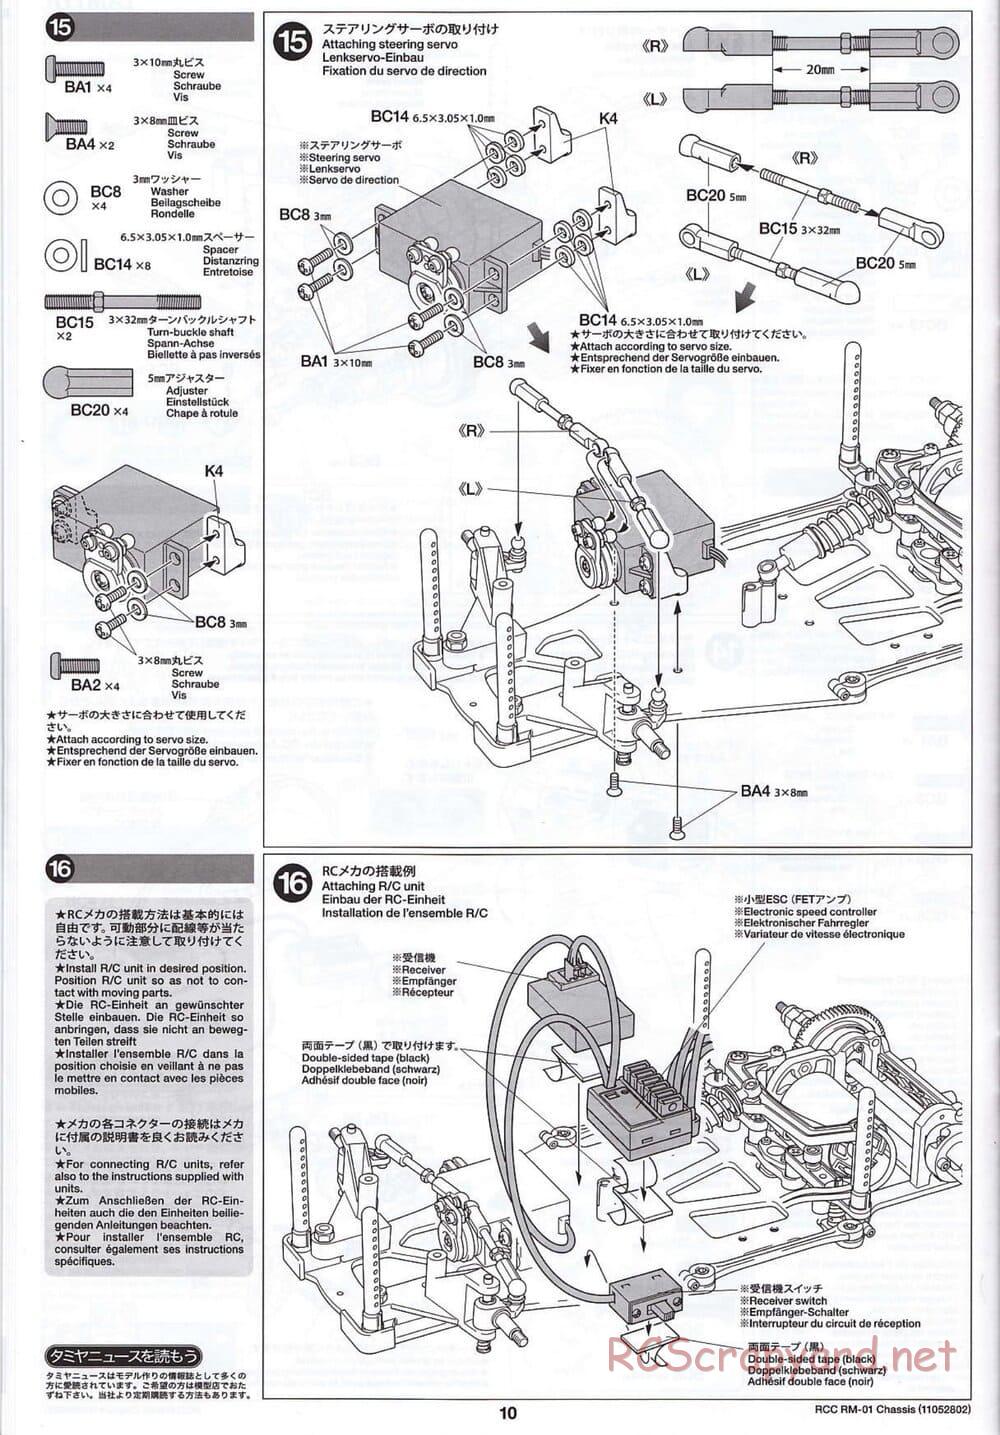 Tamiya - RM-01 Chassis - Manual - Page 10